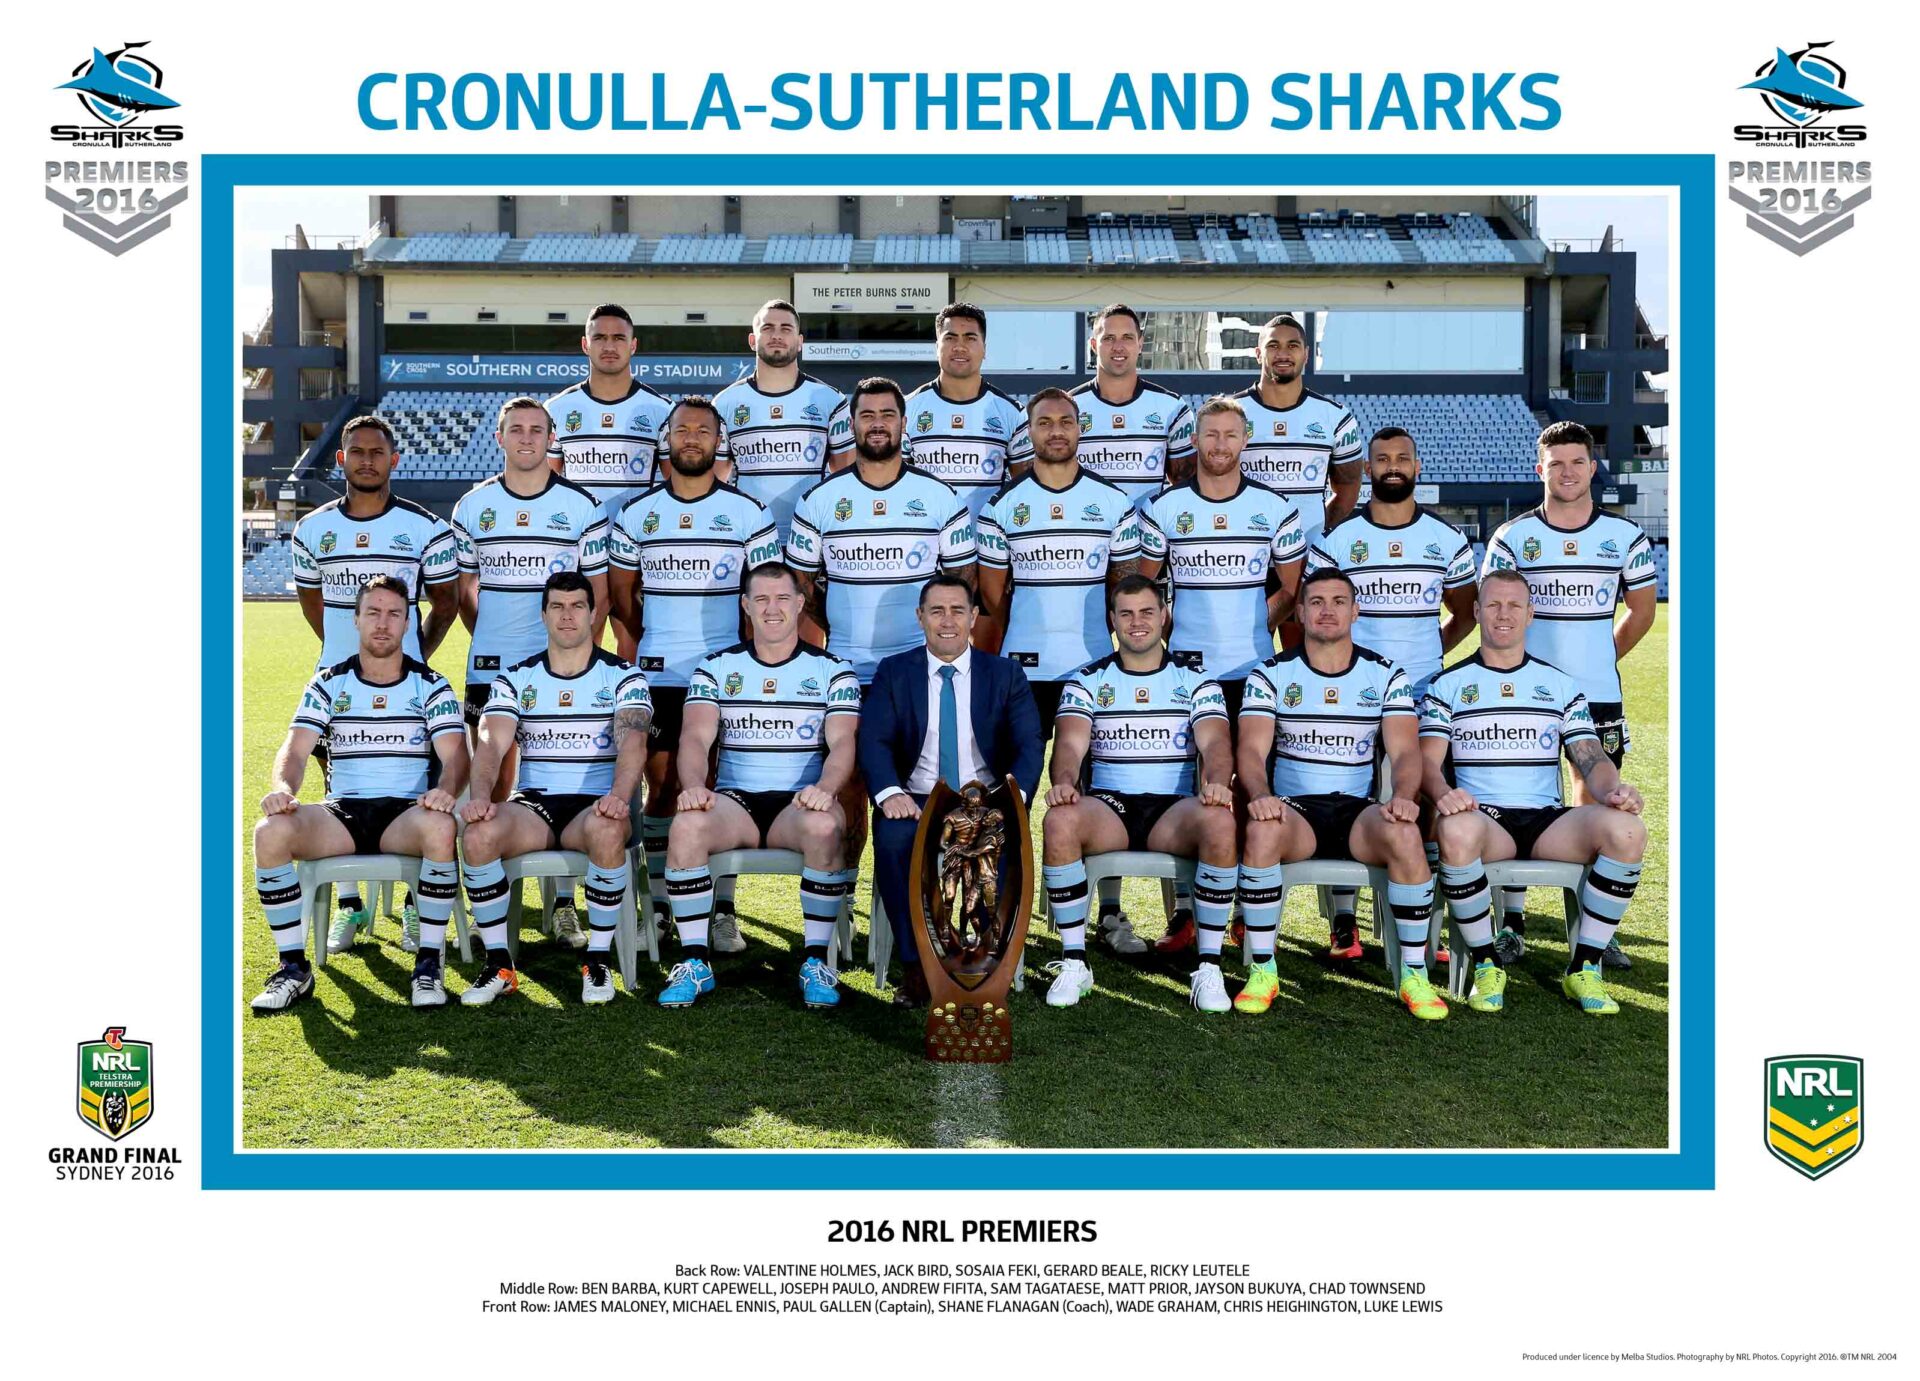 Cronulla Sharks 2016 Premiership team photo framed